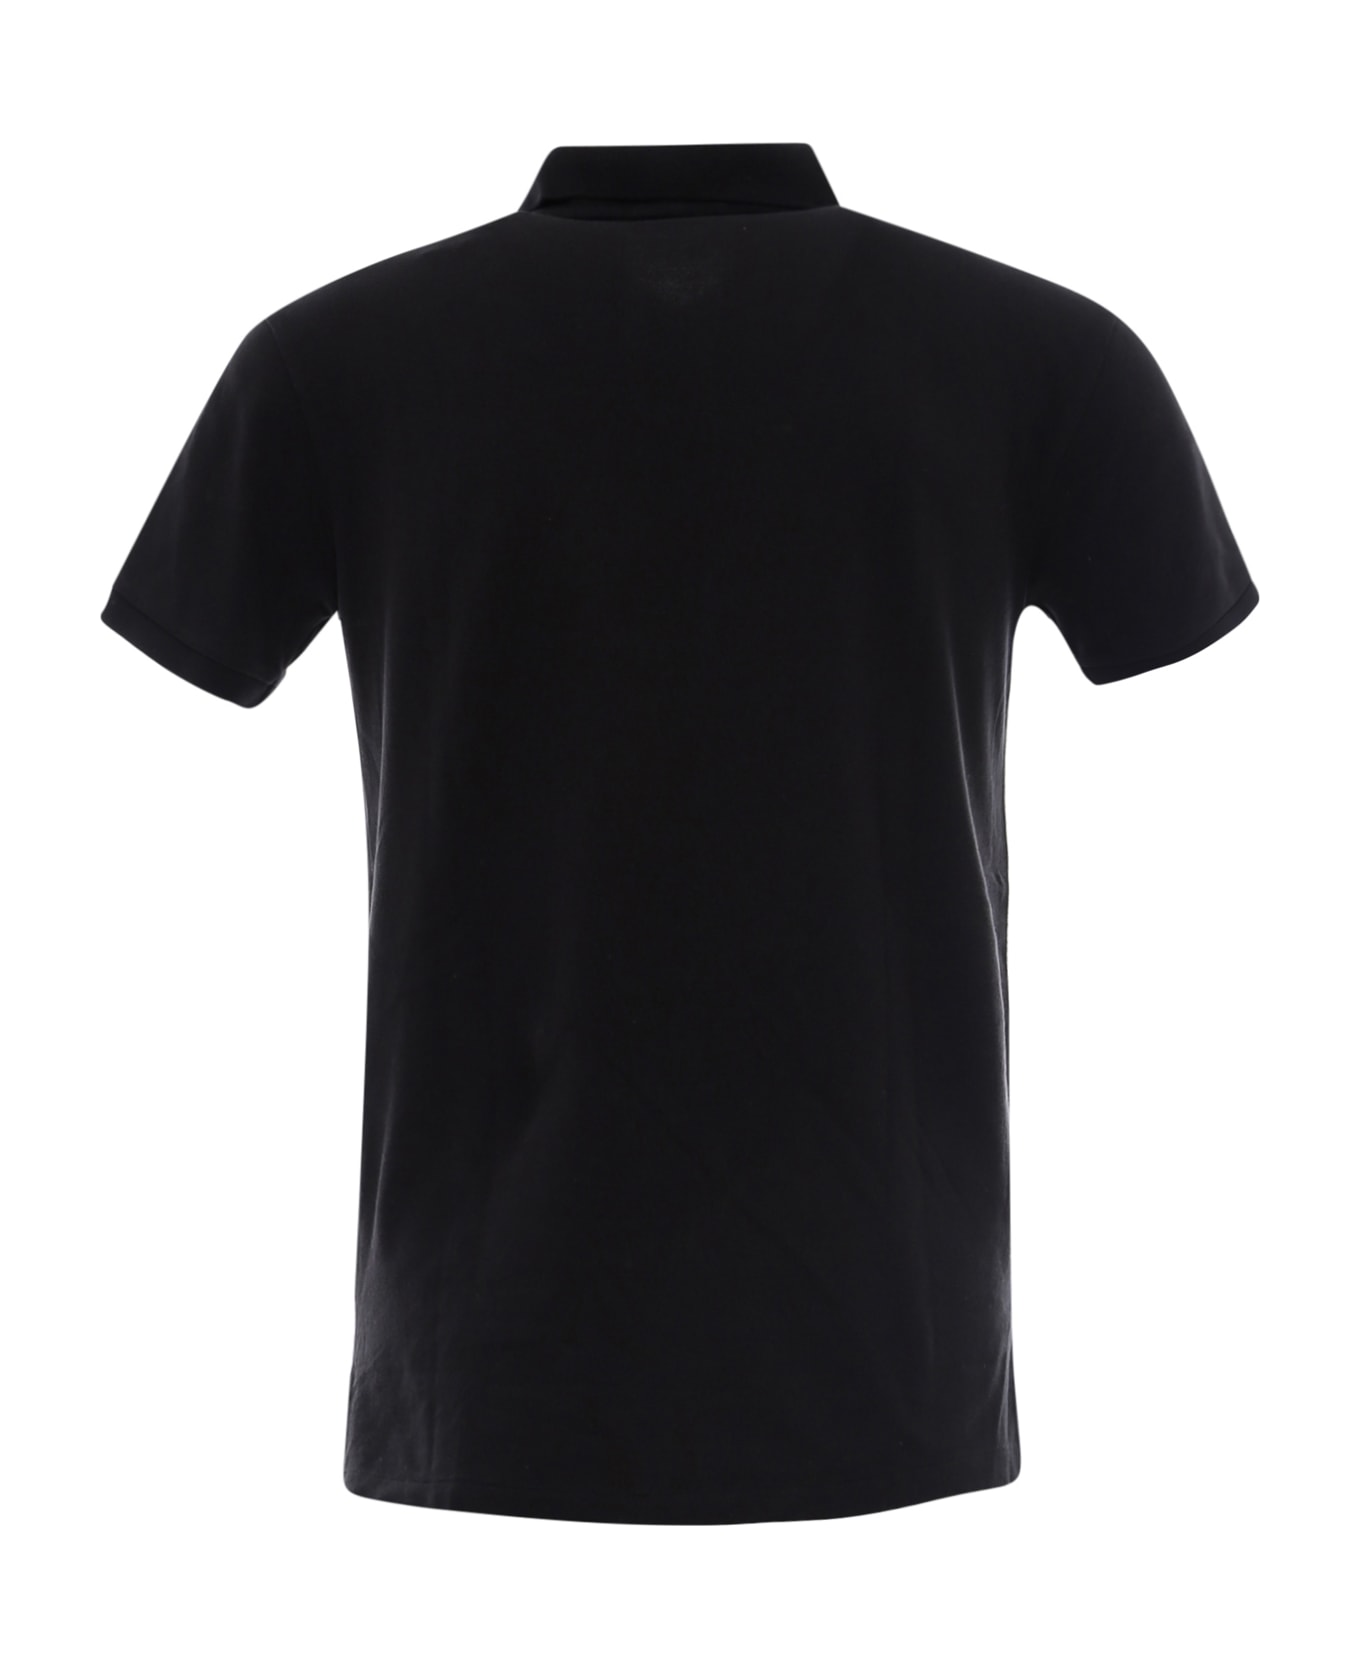 Polo Ralph Lauren Polo Shirt - Polo black ポロシャツ